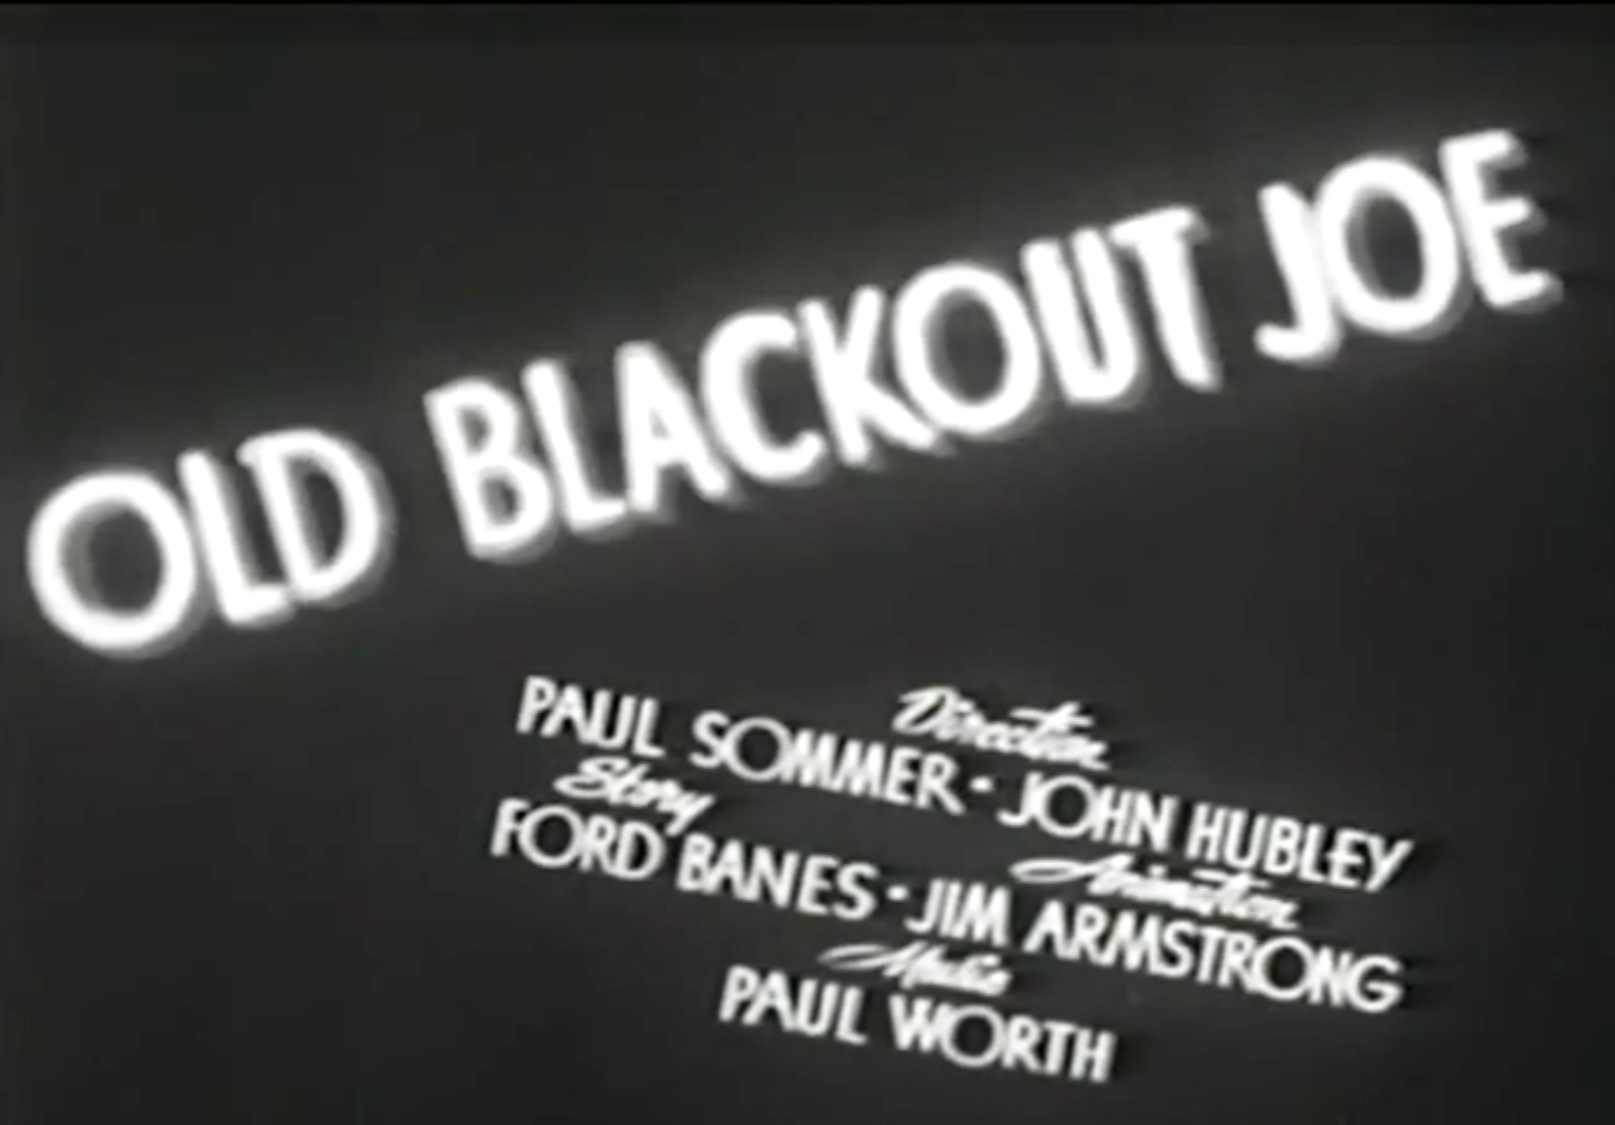 Old Blackout Joe